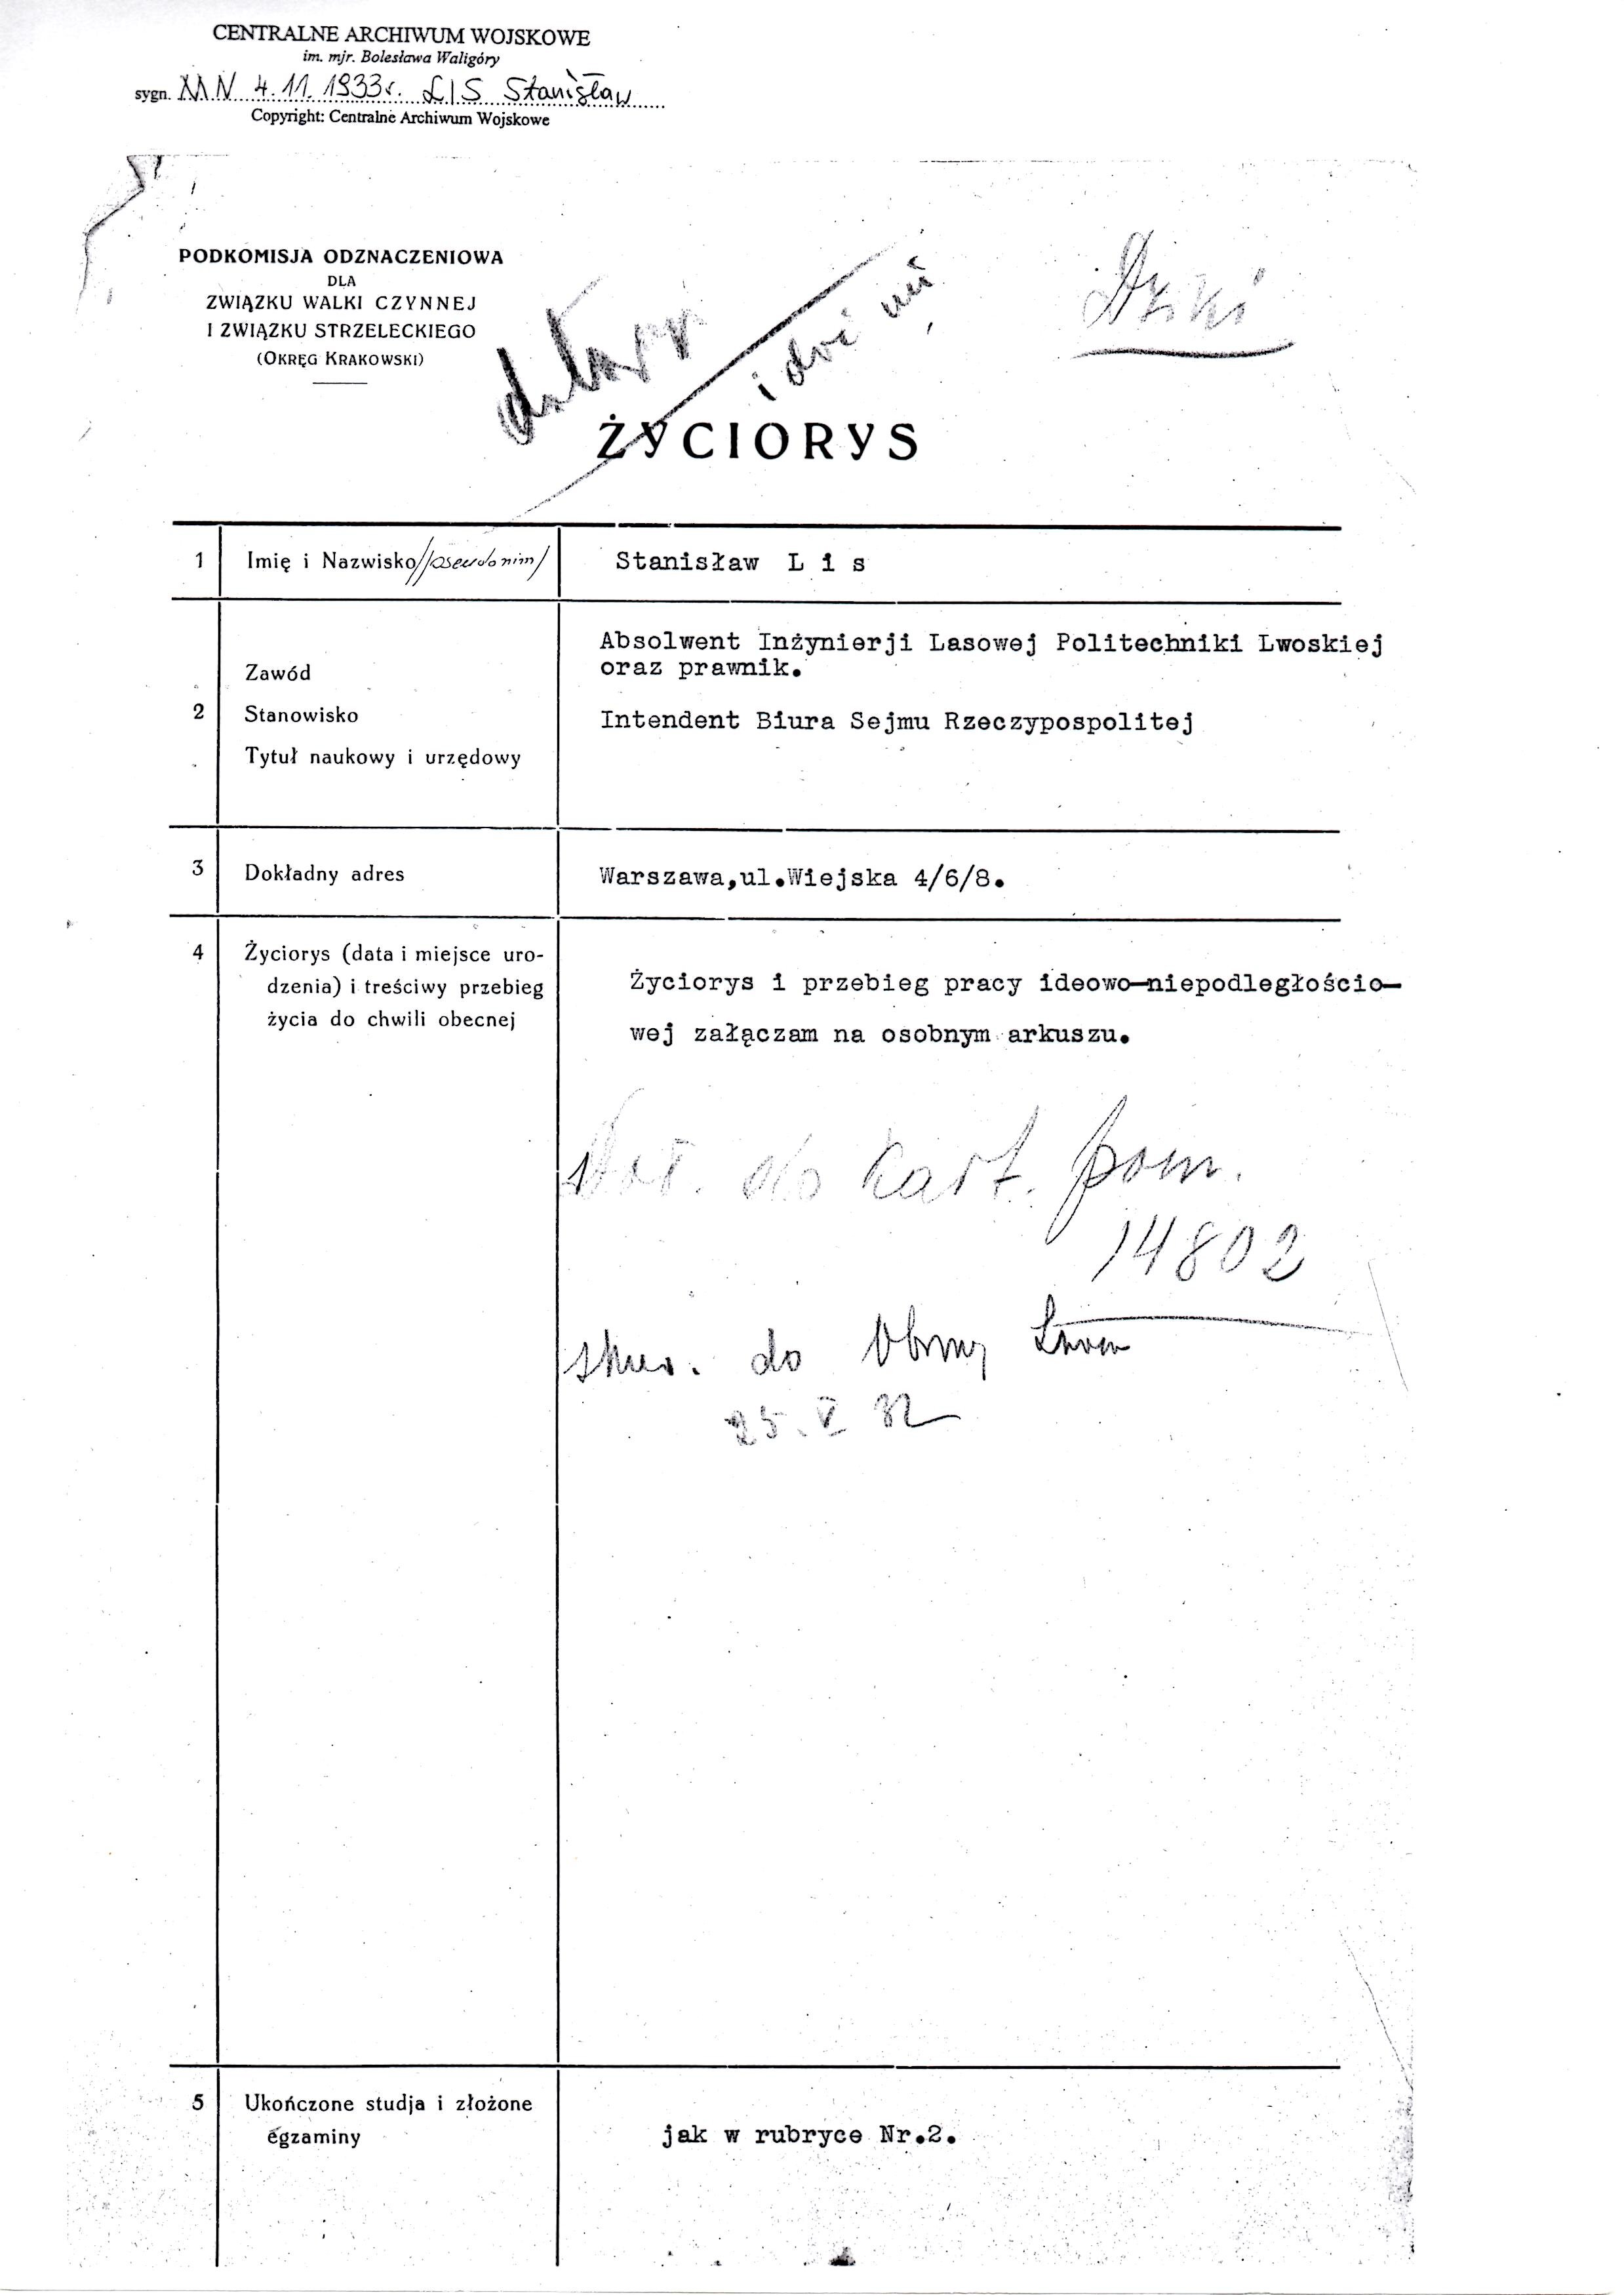 Stanislaw Lis undefined document 1 page 1 Warsaw Sejm.jpg